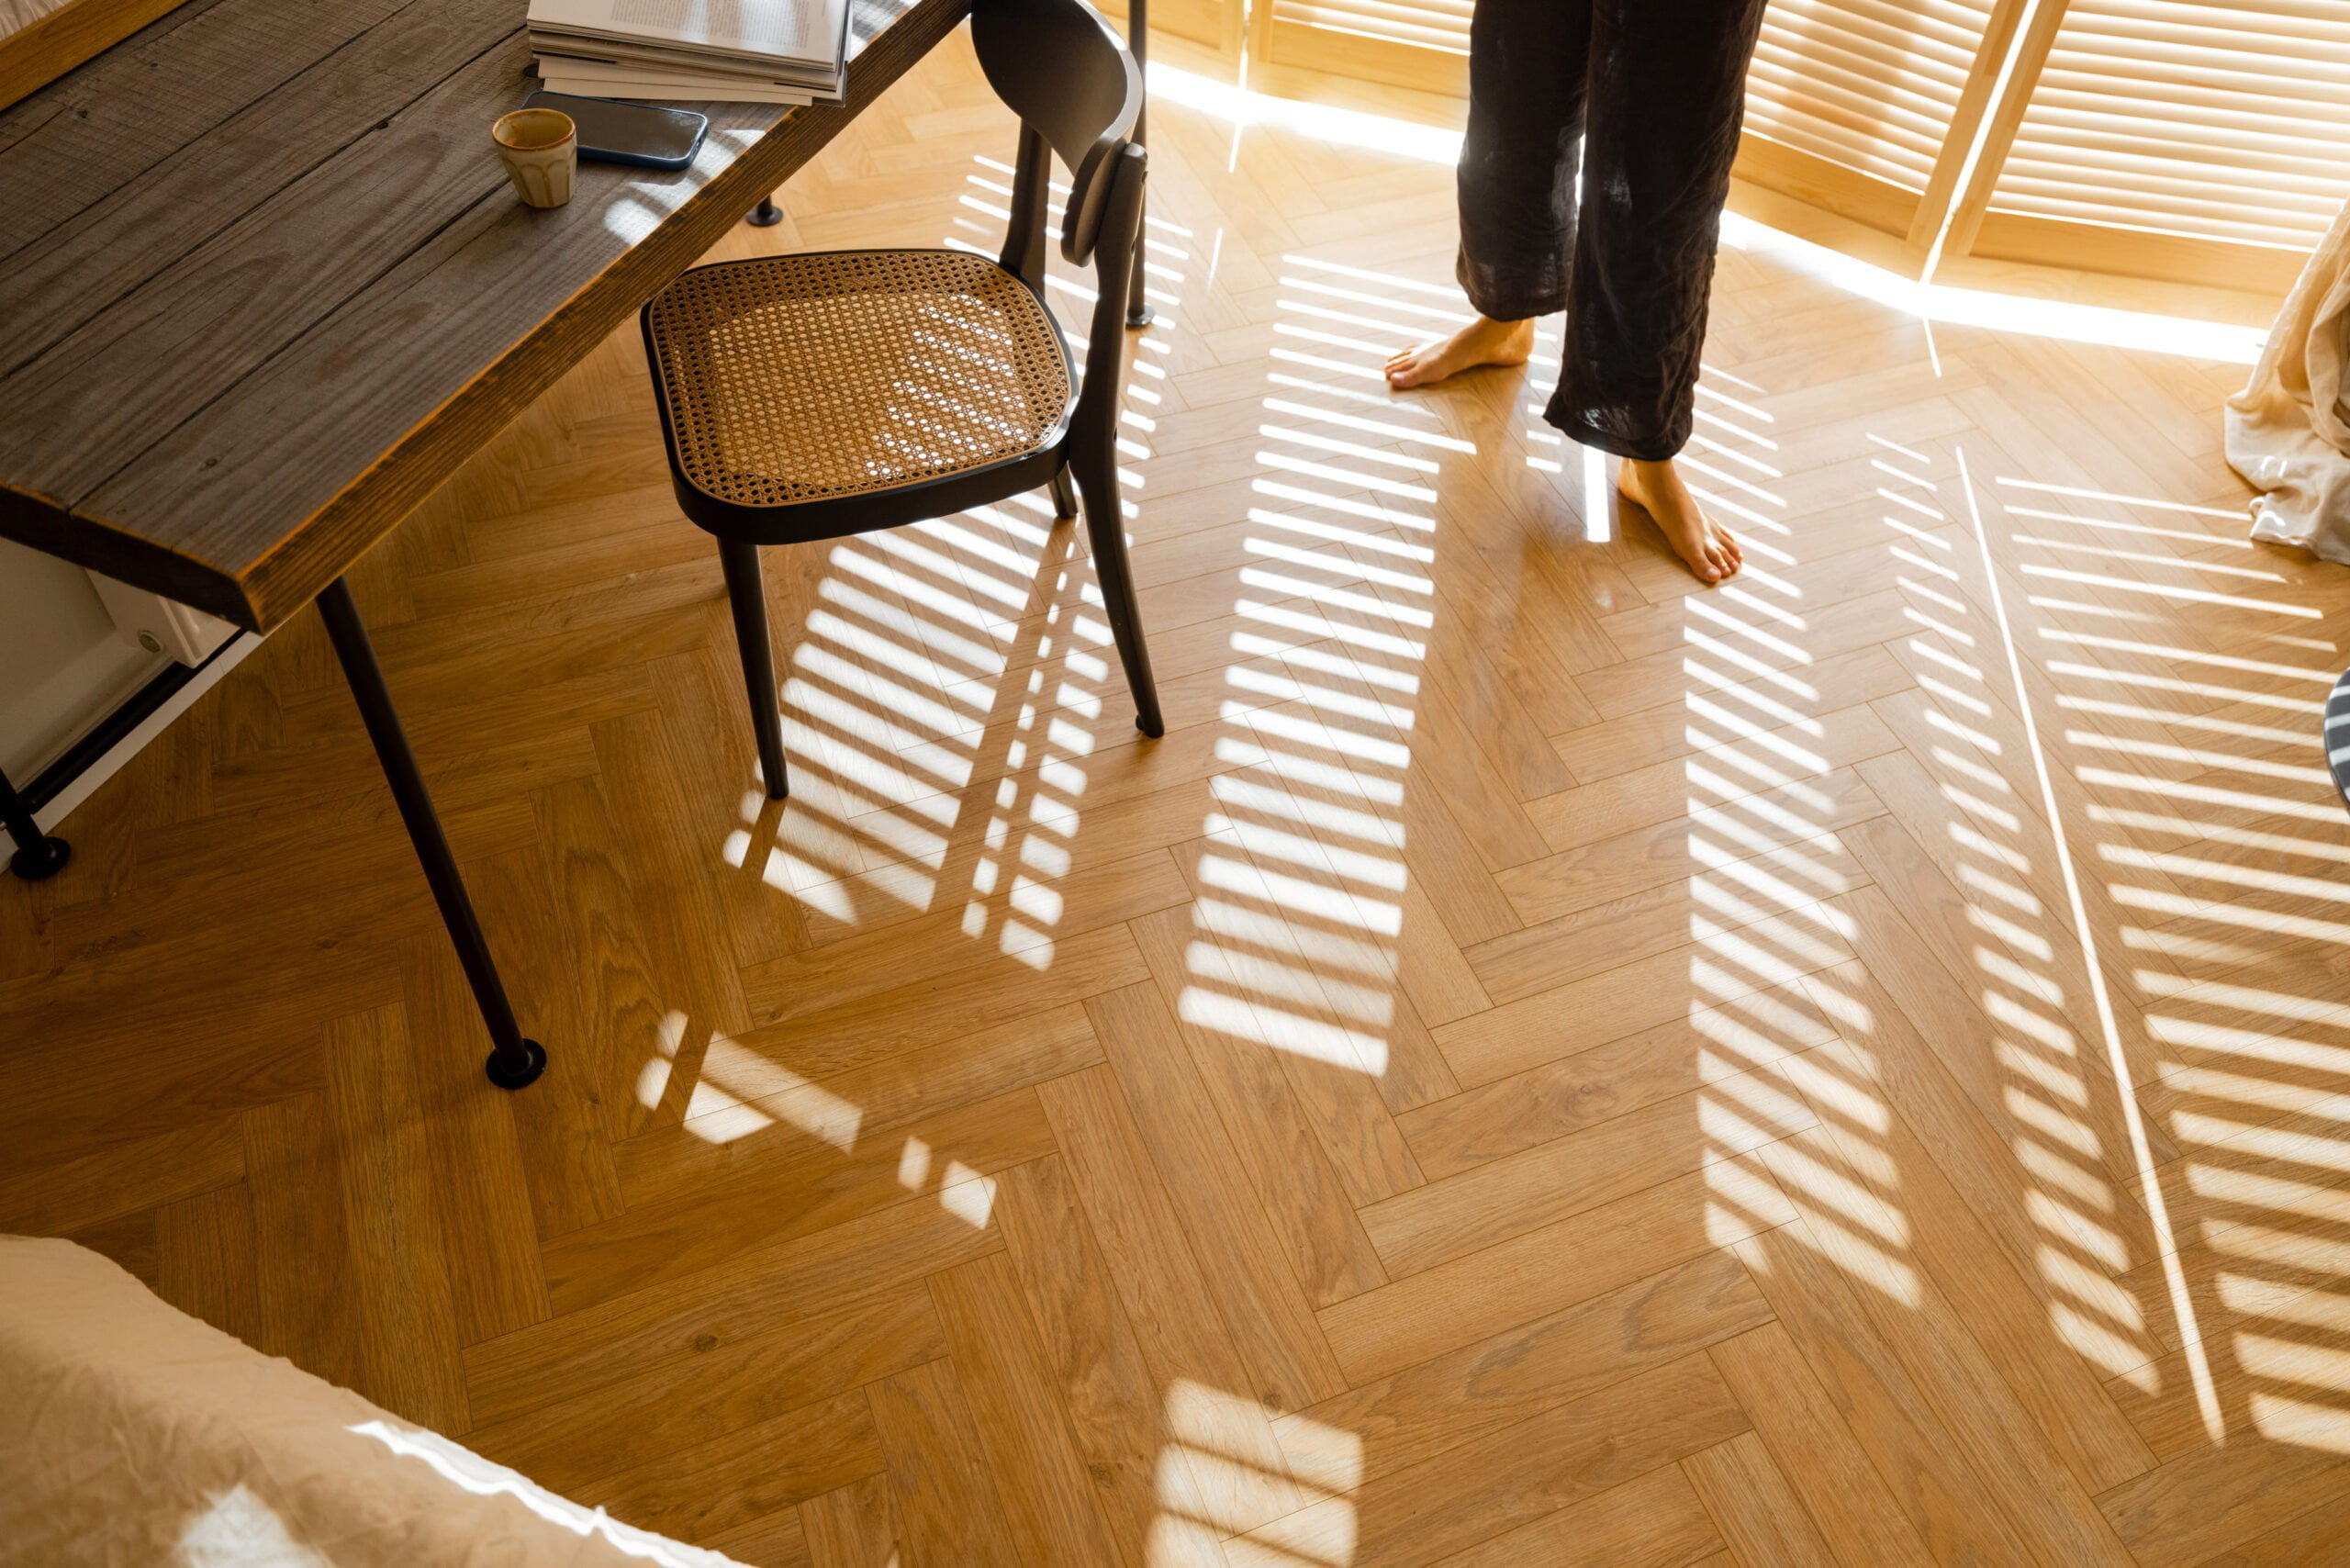 Parquet Flooring: The Benefits & Drawbacks